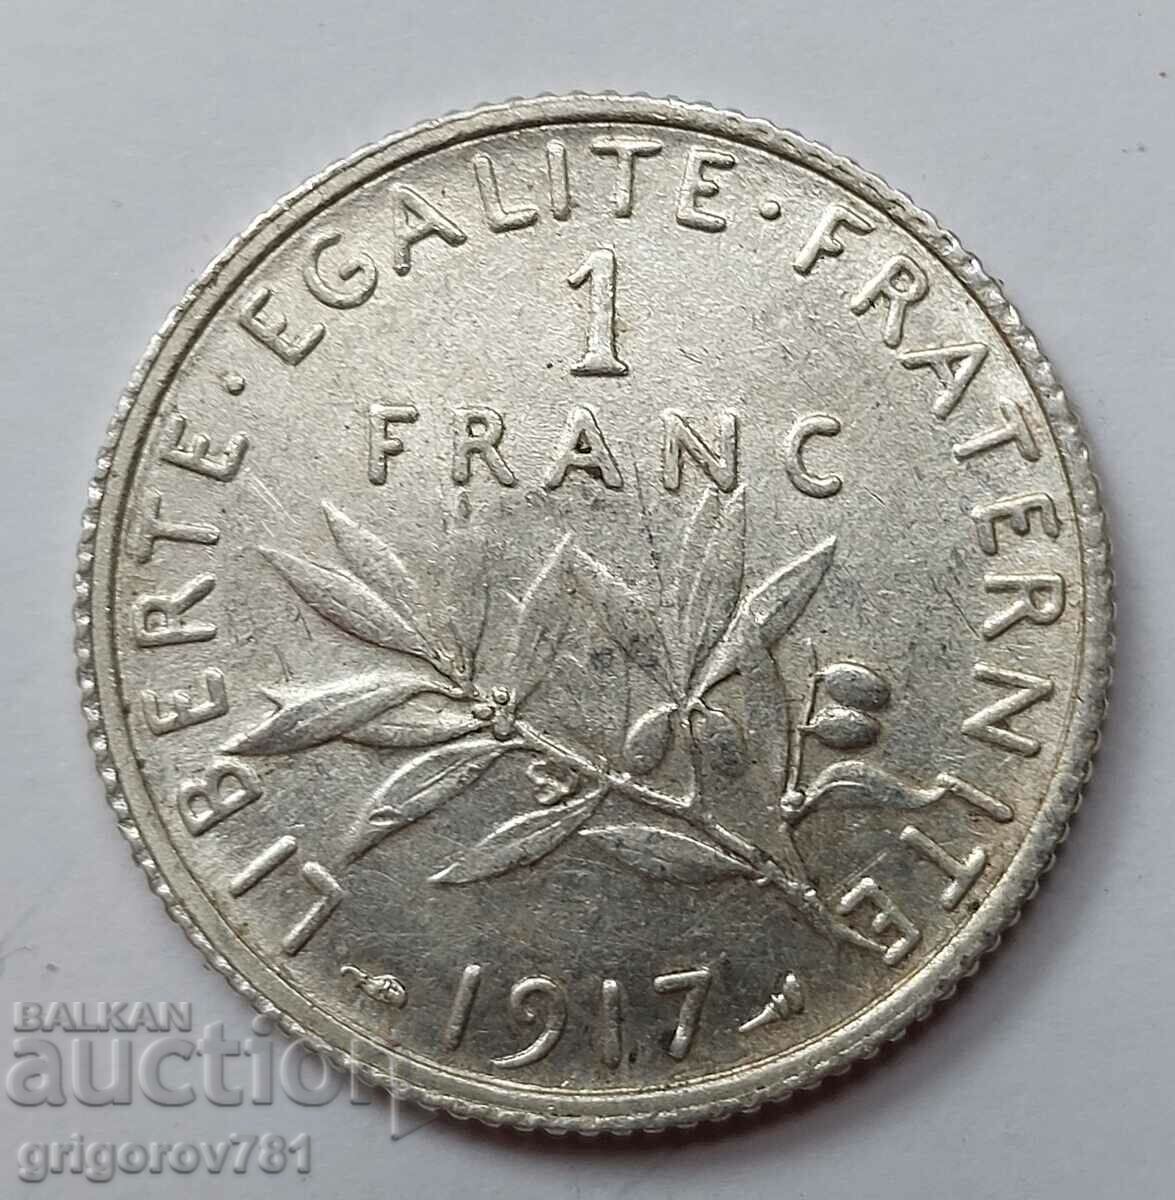 1 franc silver France 1917 - silver coin №16